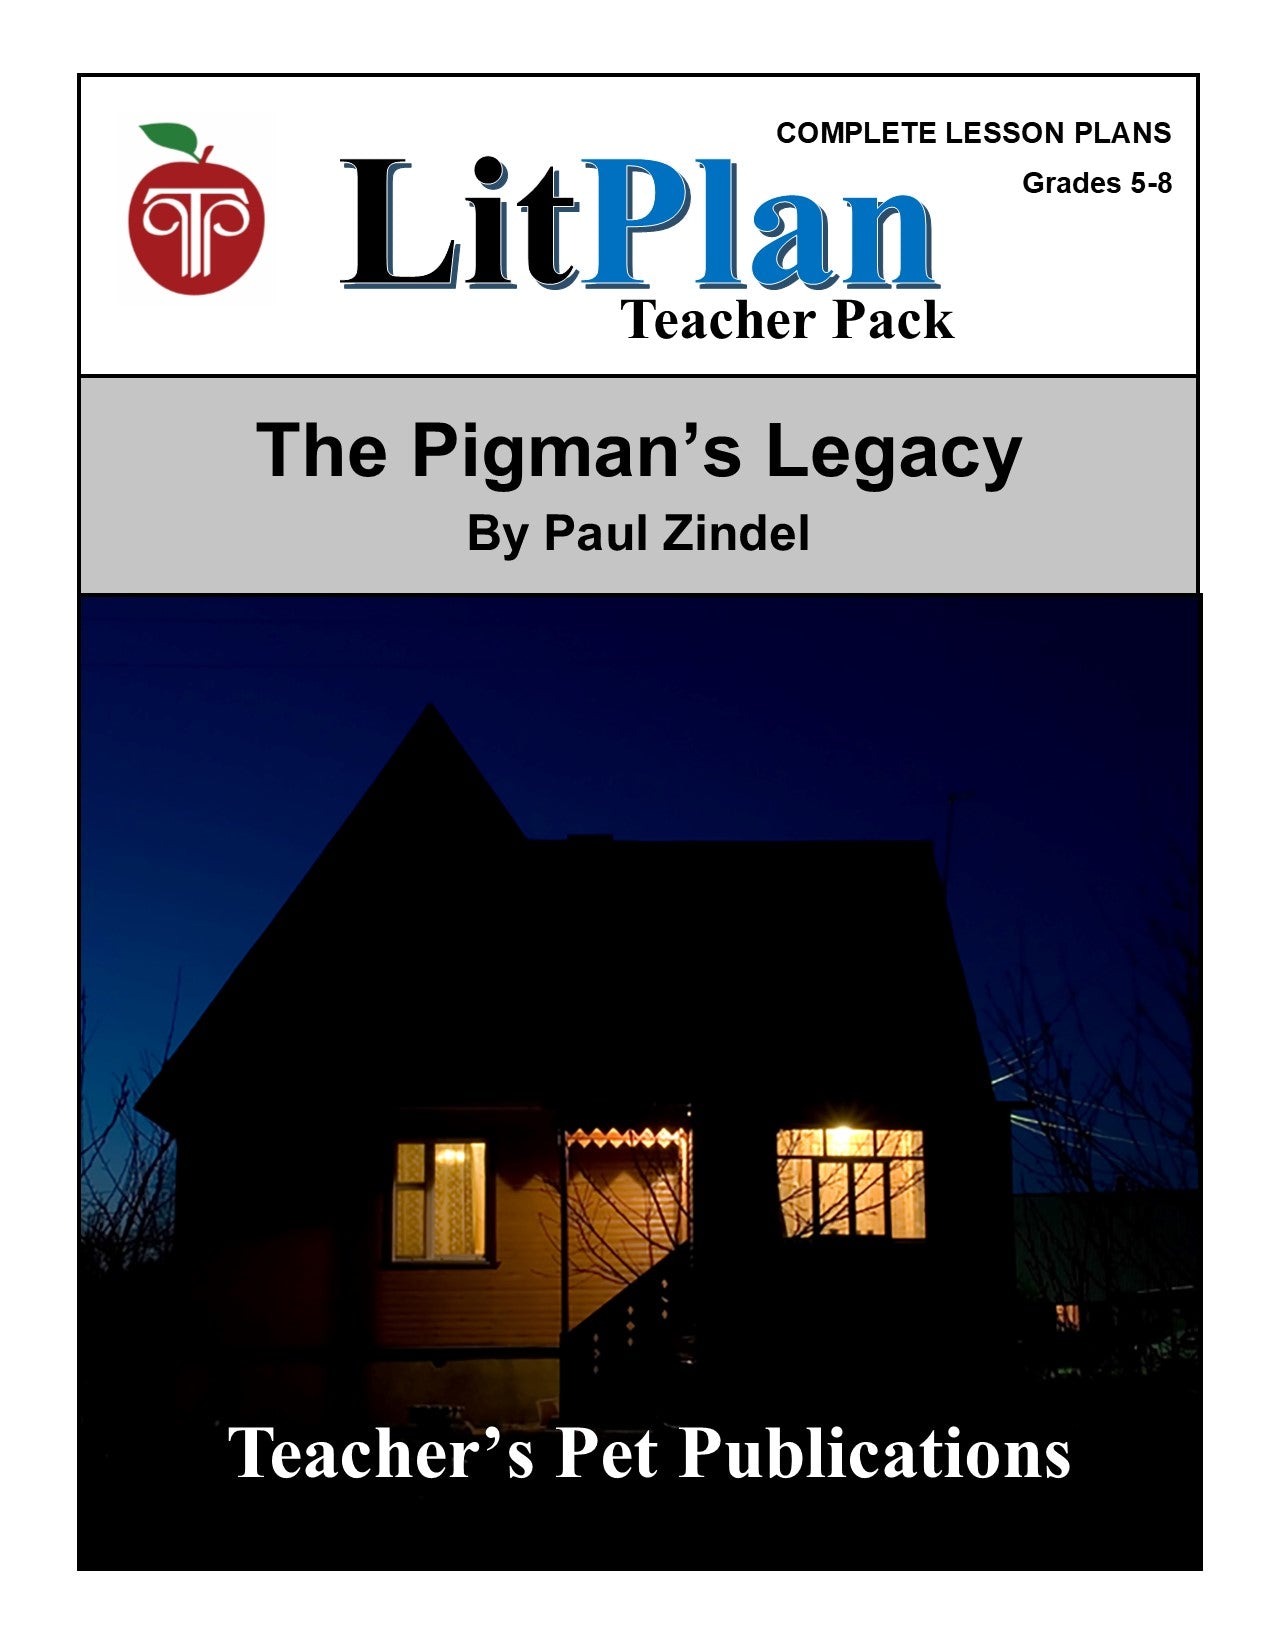 The Pigman's Legacy: LitPlan Teacher Pack Grades 5-8